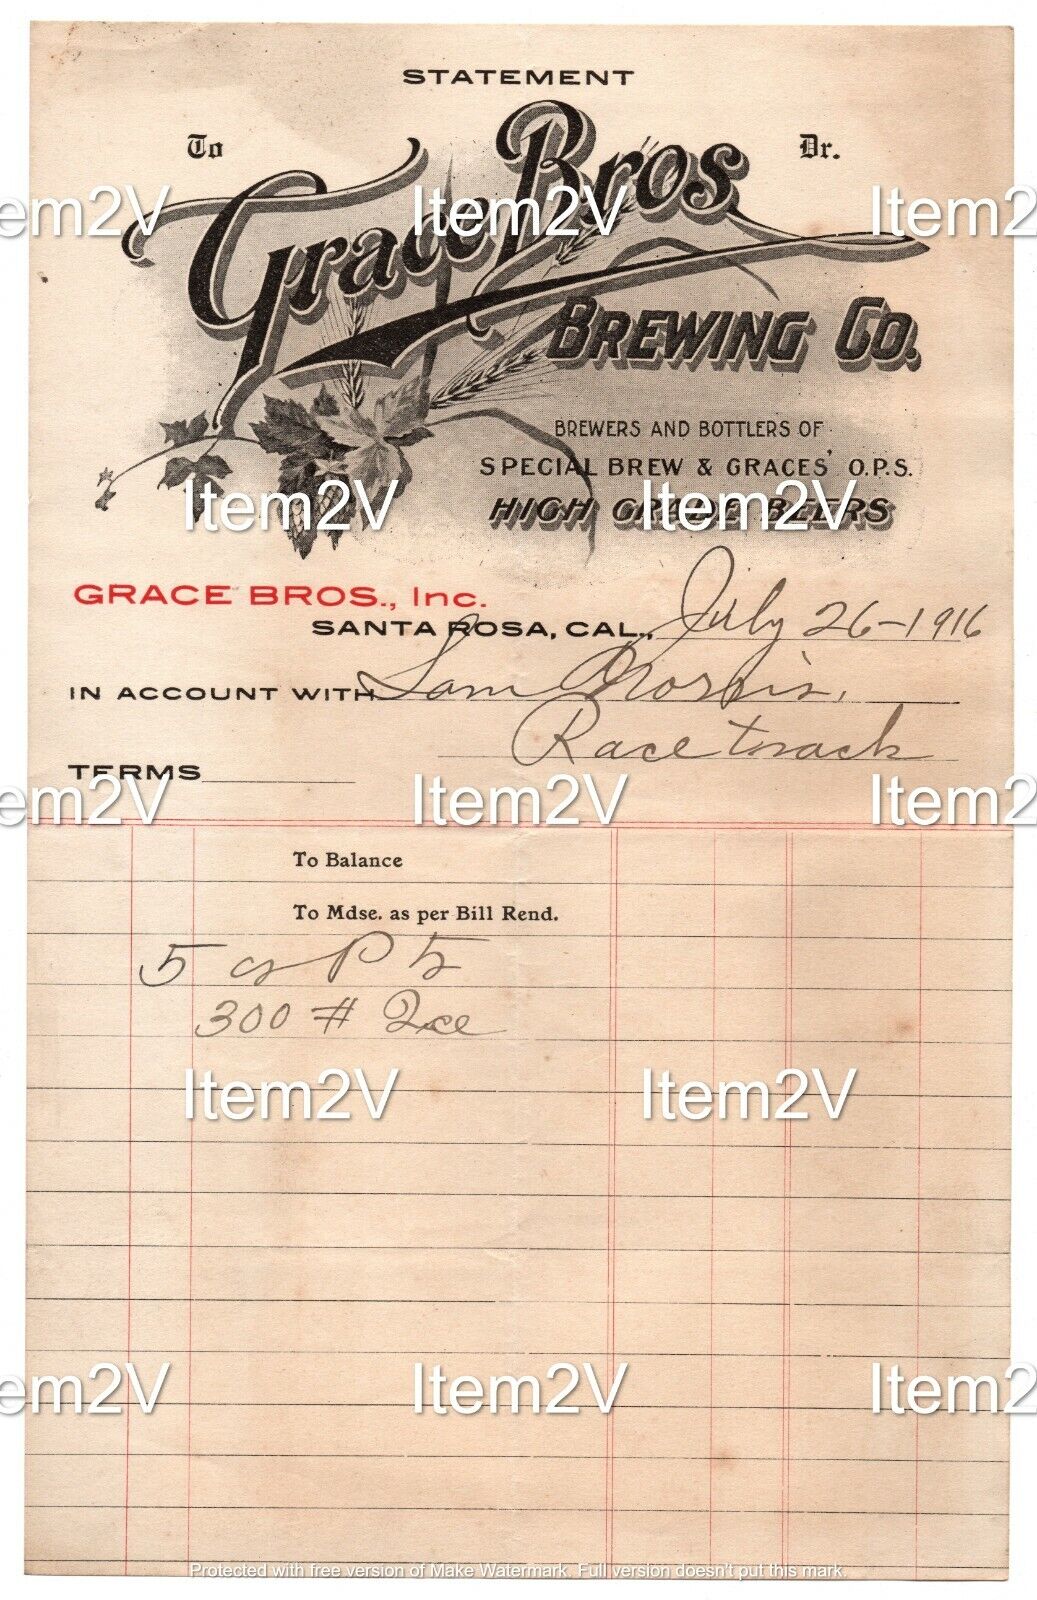 Vintage Grace Bros. Brewing Co. 1916 Billing Statement Santa Rosa CA Item2V